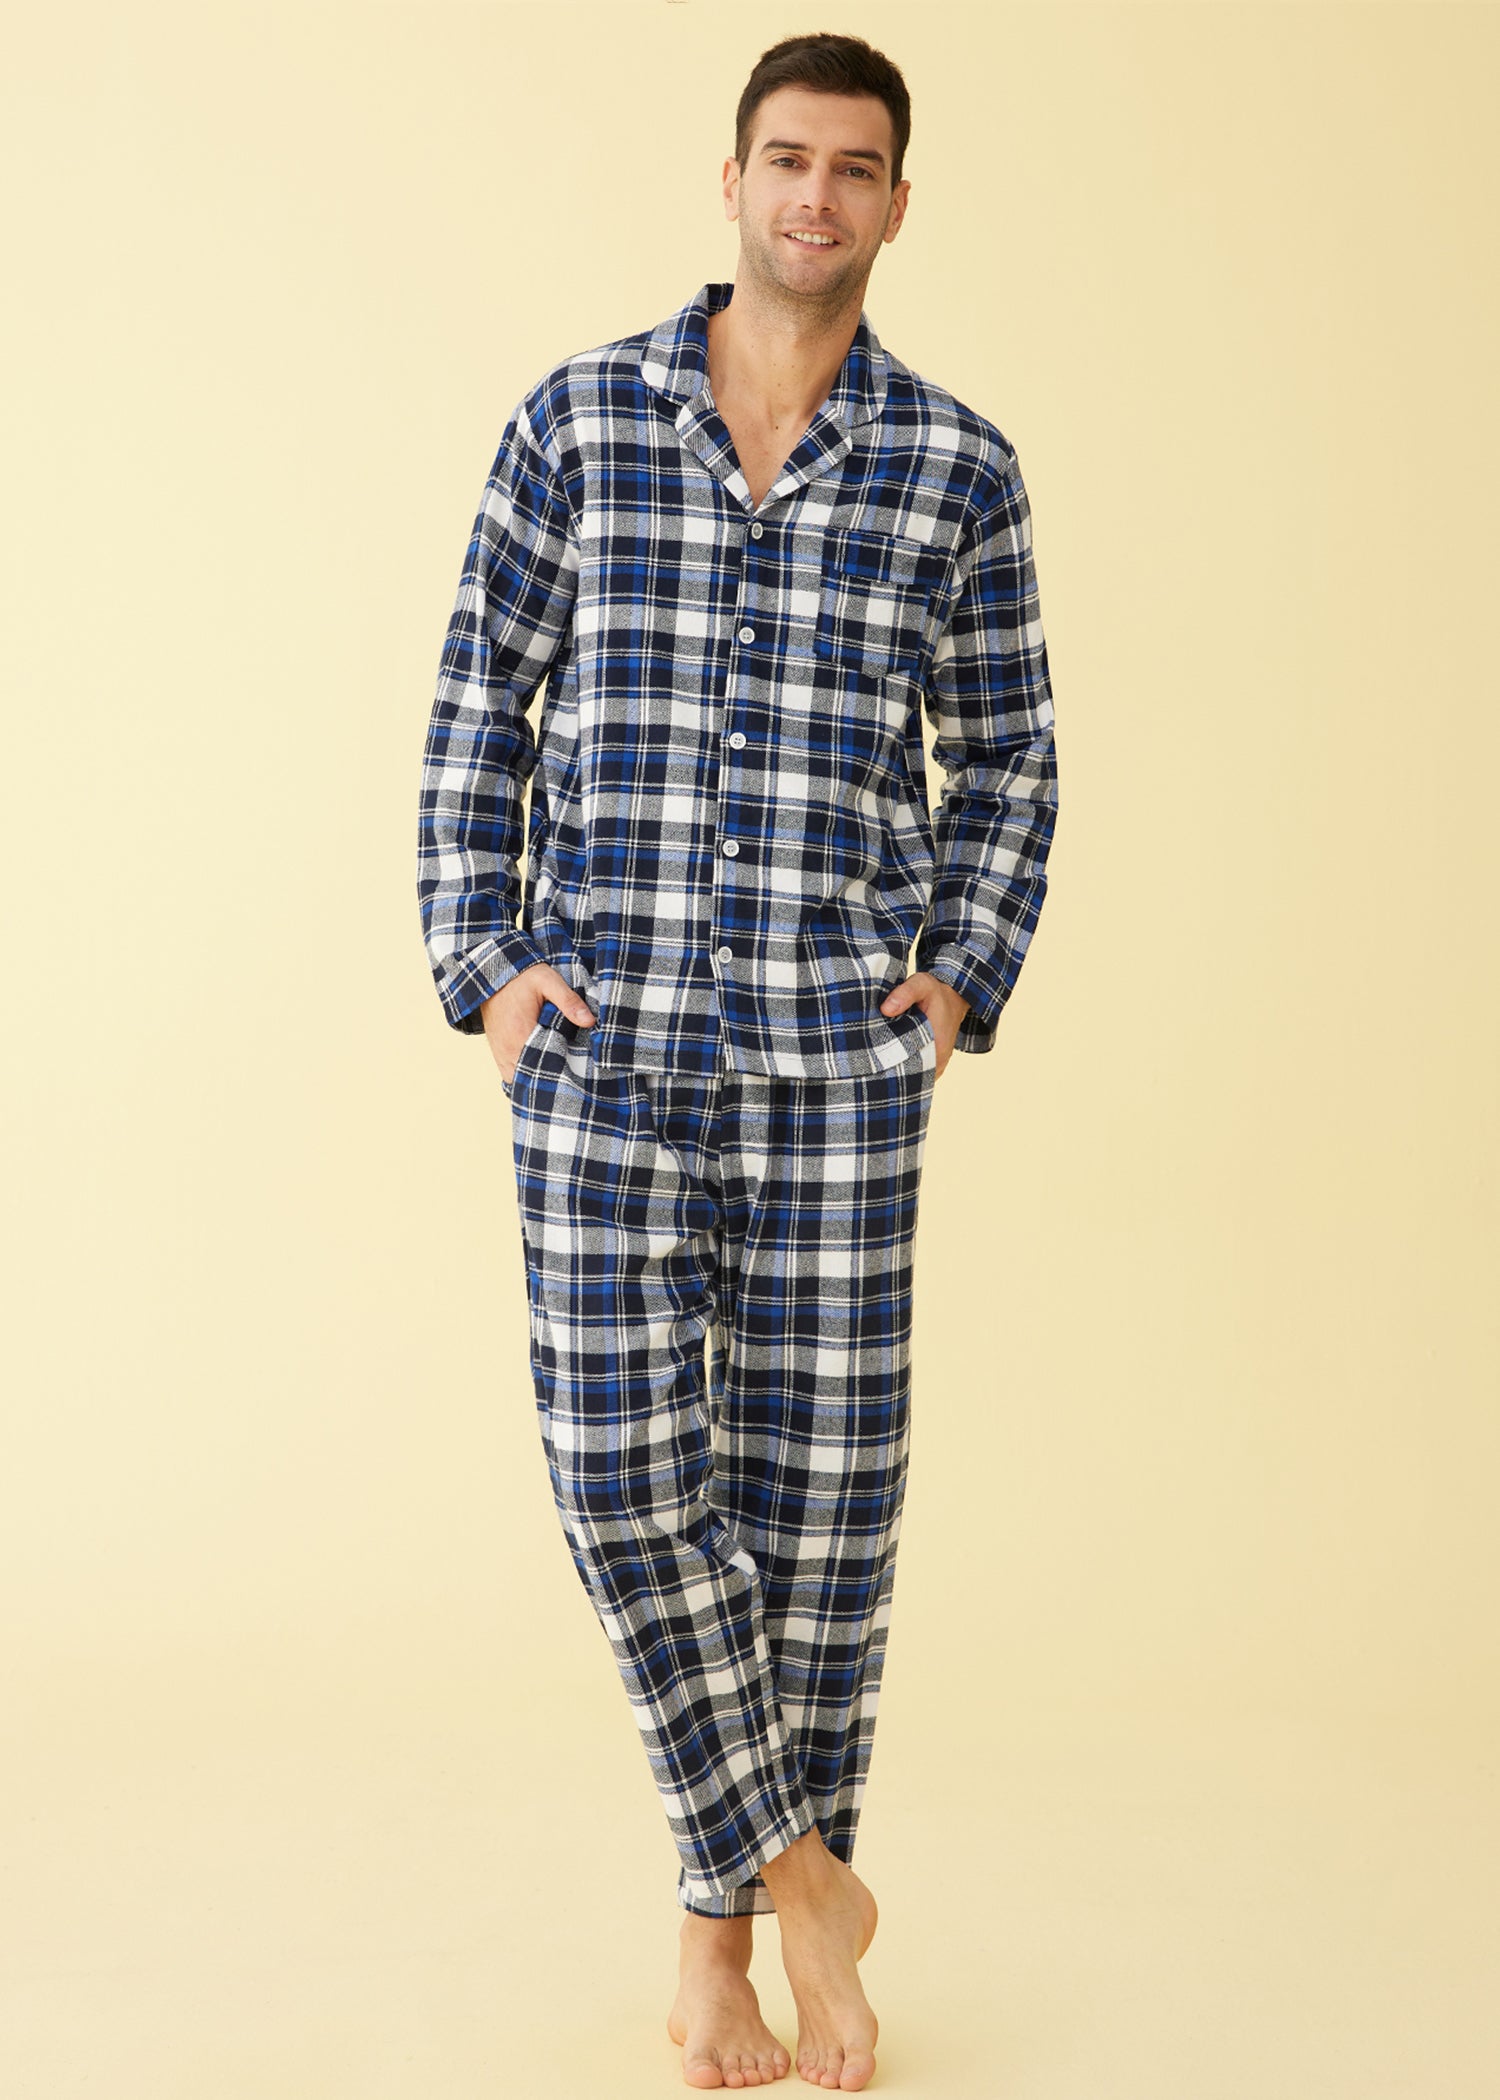 Men’s Cotton Pajama Set Plaid Woven Sleepwear